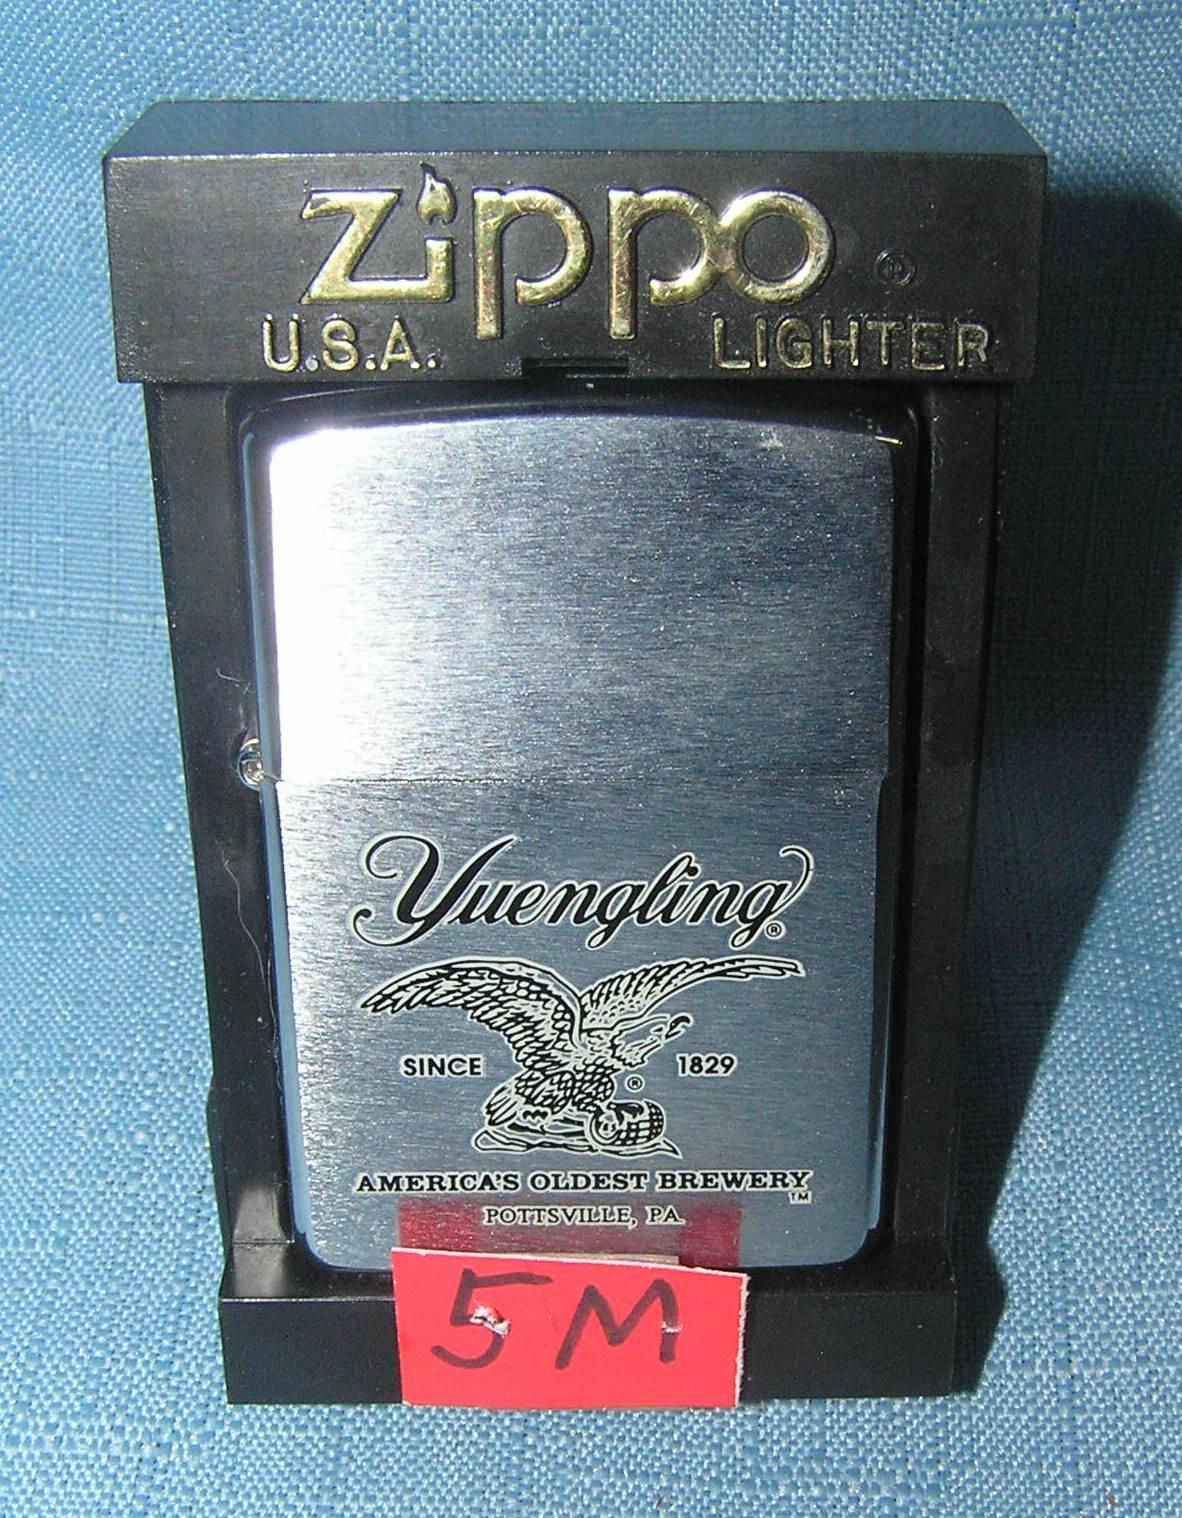 Yeungling beer advertising Zippo cigarette lighter